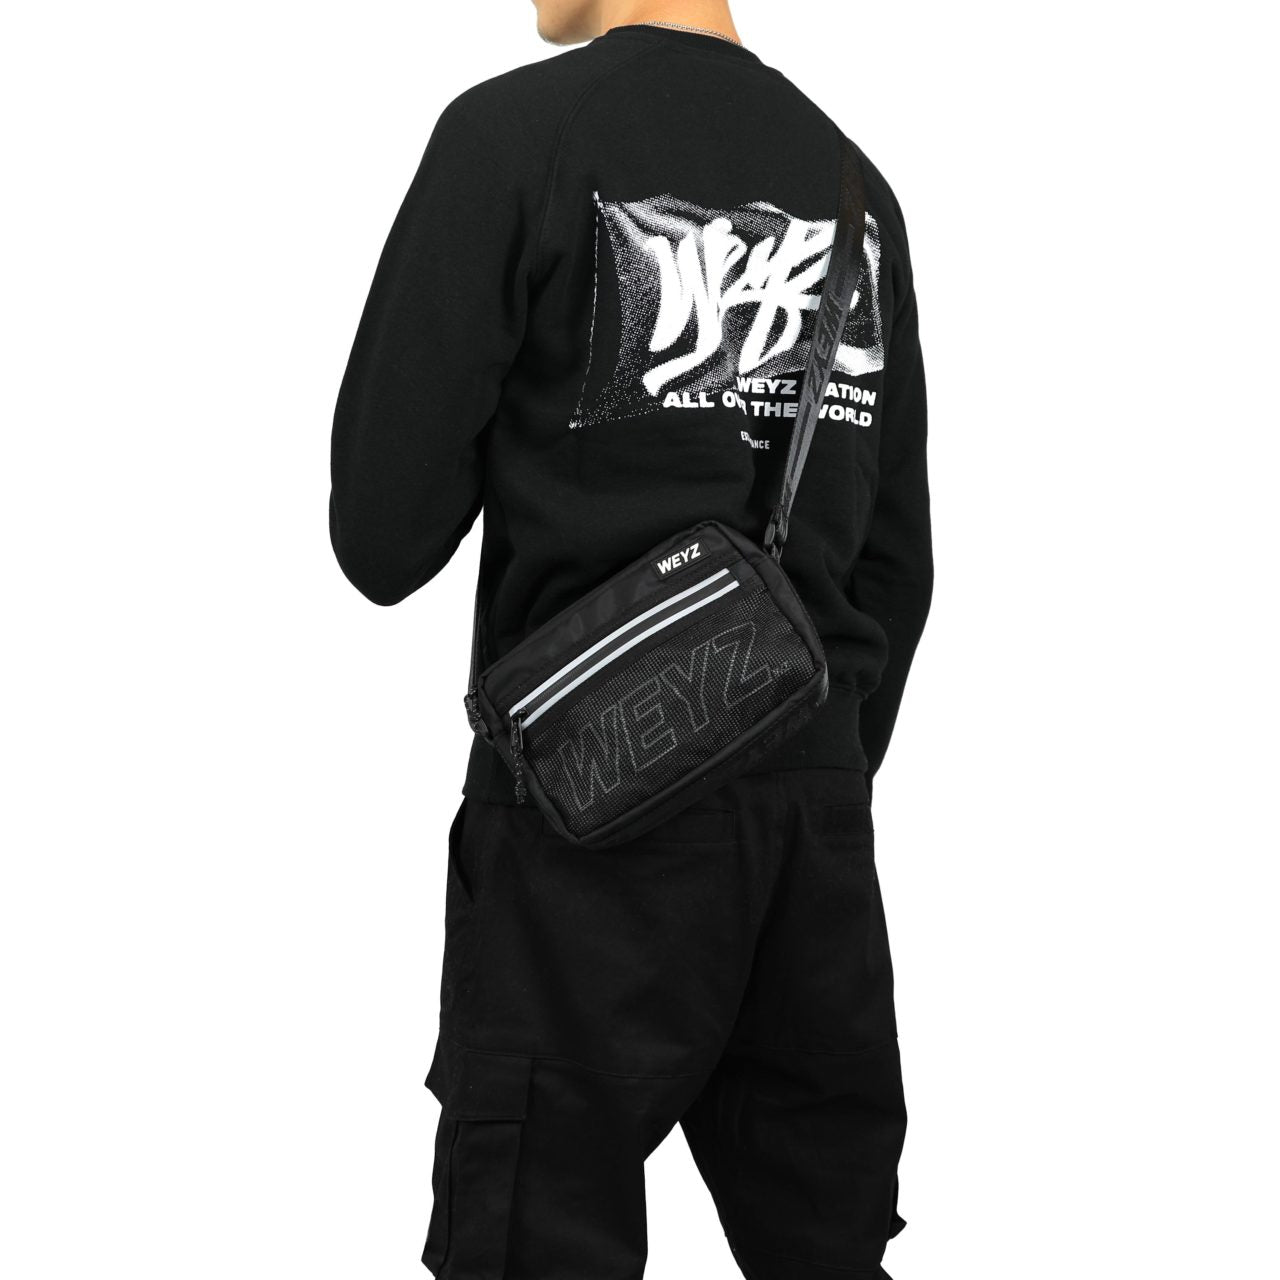 shoulder bag weyz black 100% woven polyester rubber patch adjustable size reflective zip